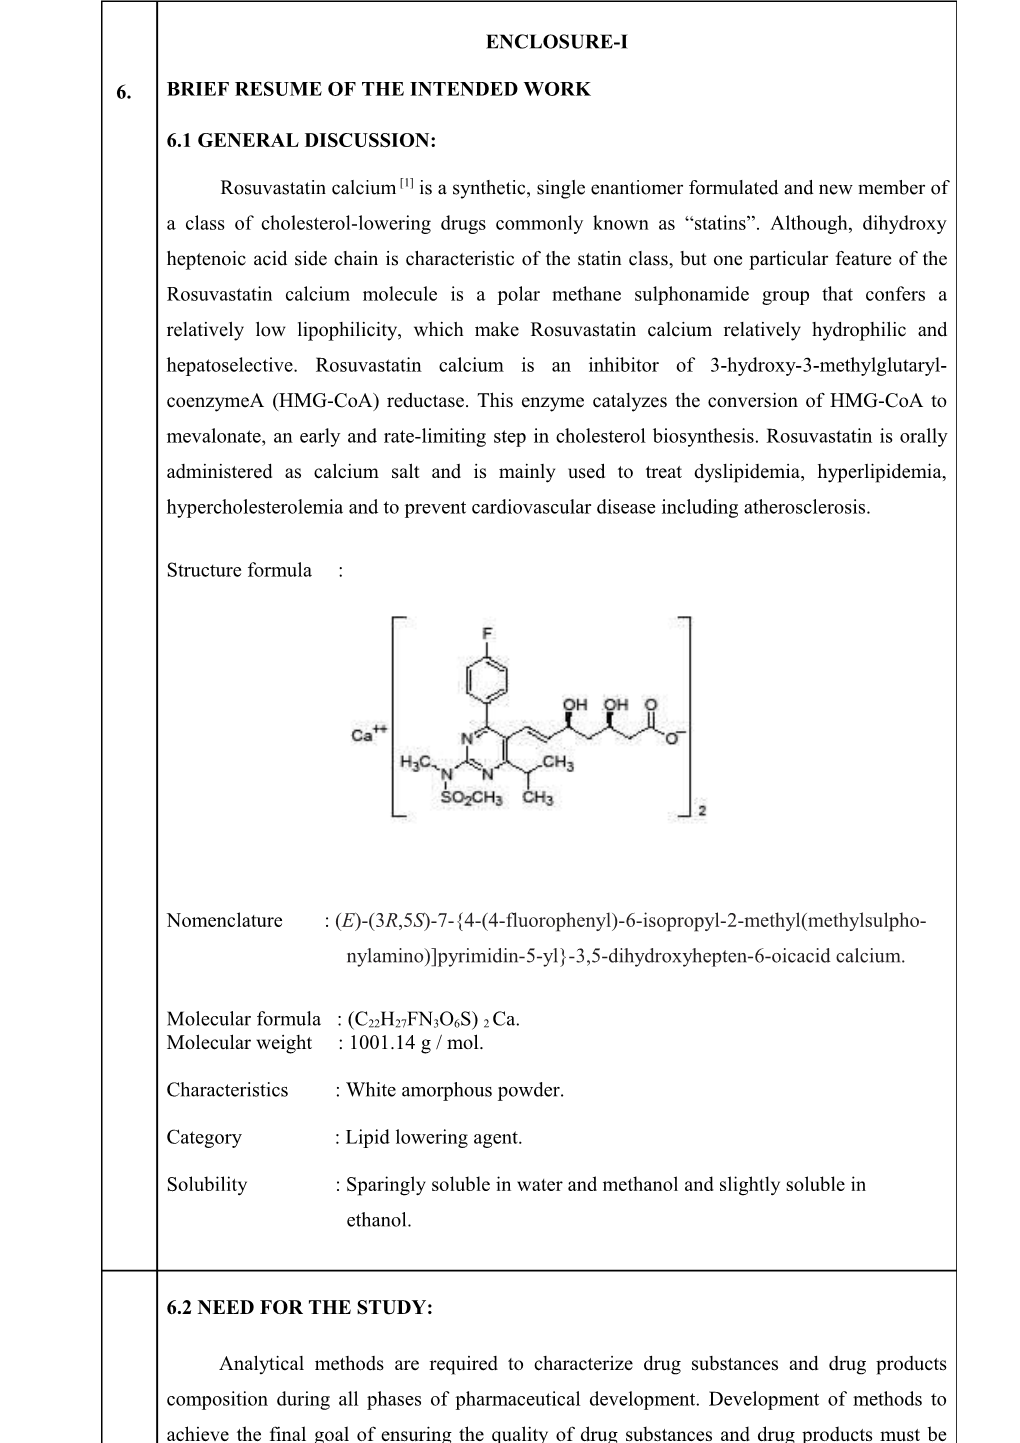 Singh RM, Et Al 4 ., Studied on Spectrophotometric Estimation of Rosuvastatin Calcium In